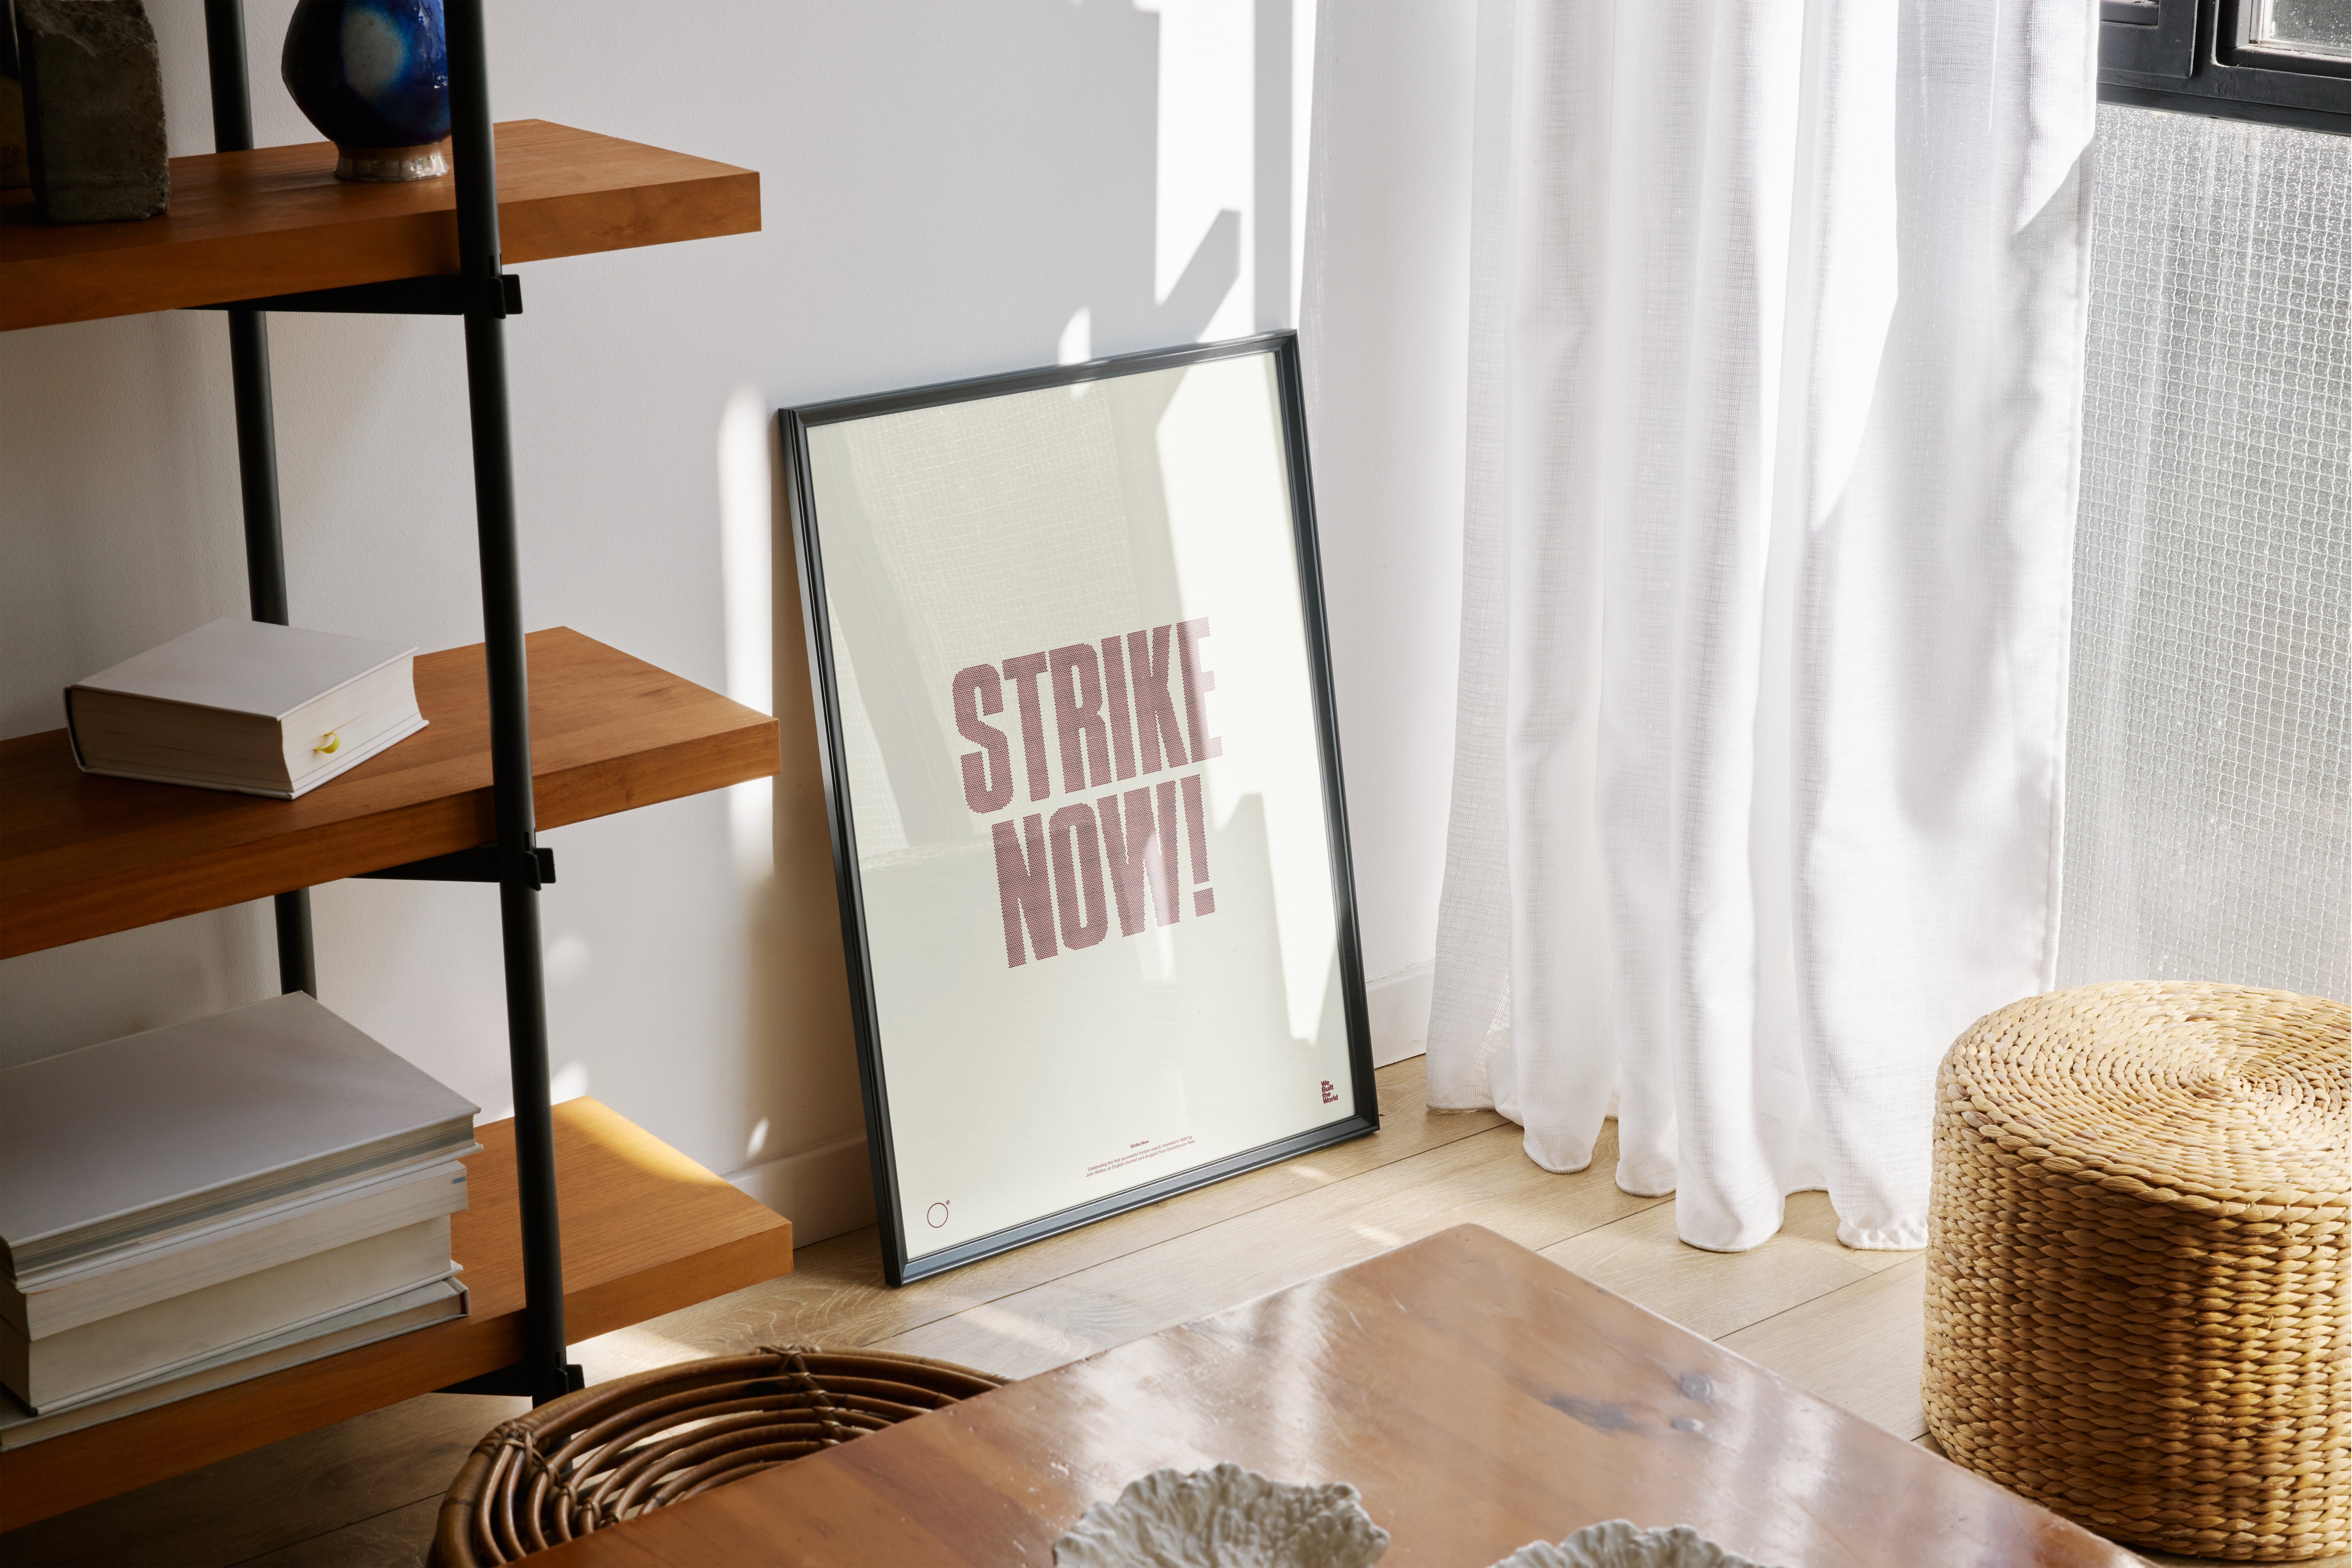 Strike Now! - We Built The World - Teesside Art Prints